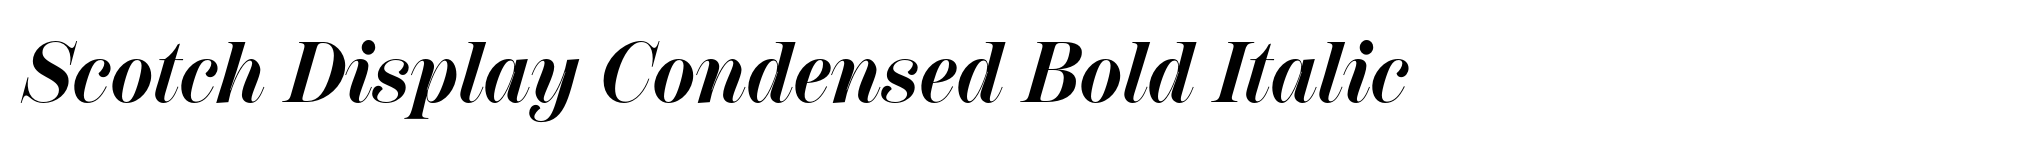 Scotch Display Condensed Bold Italic image